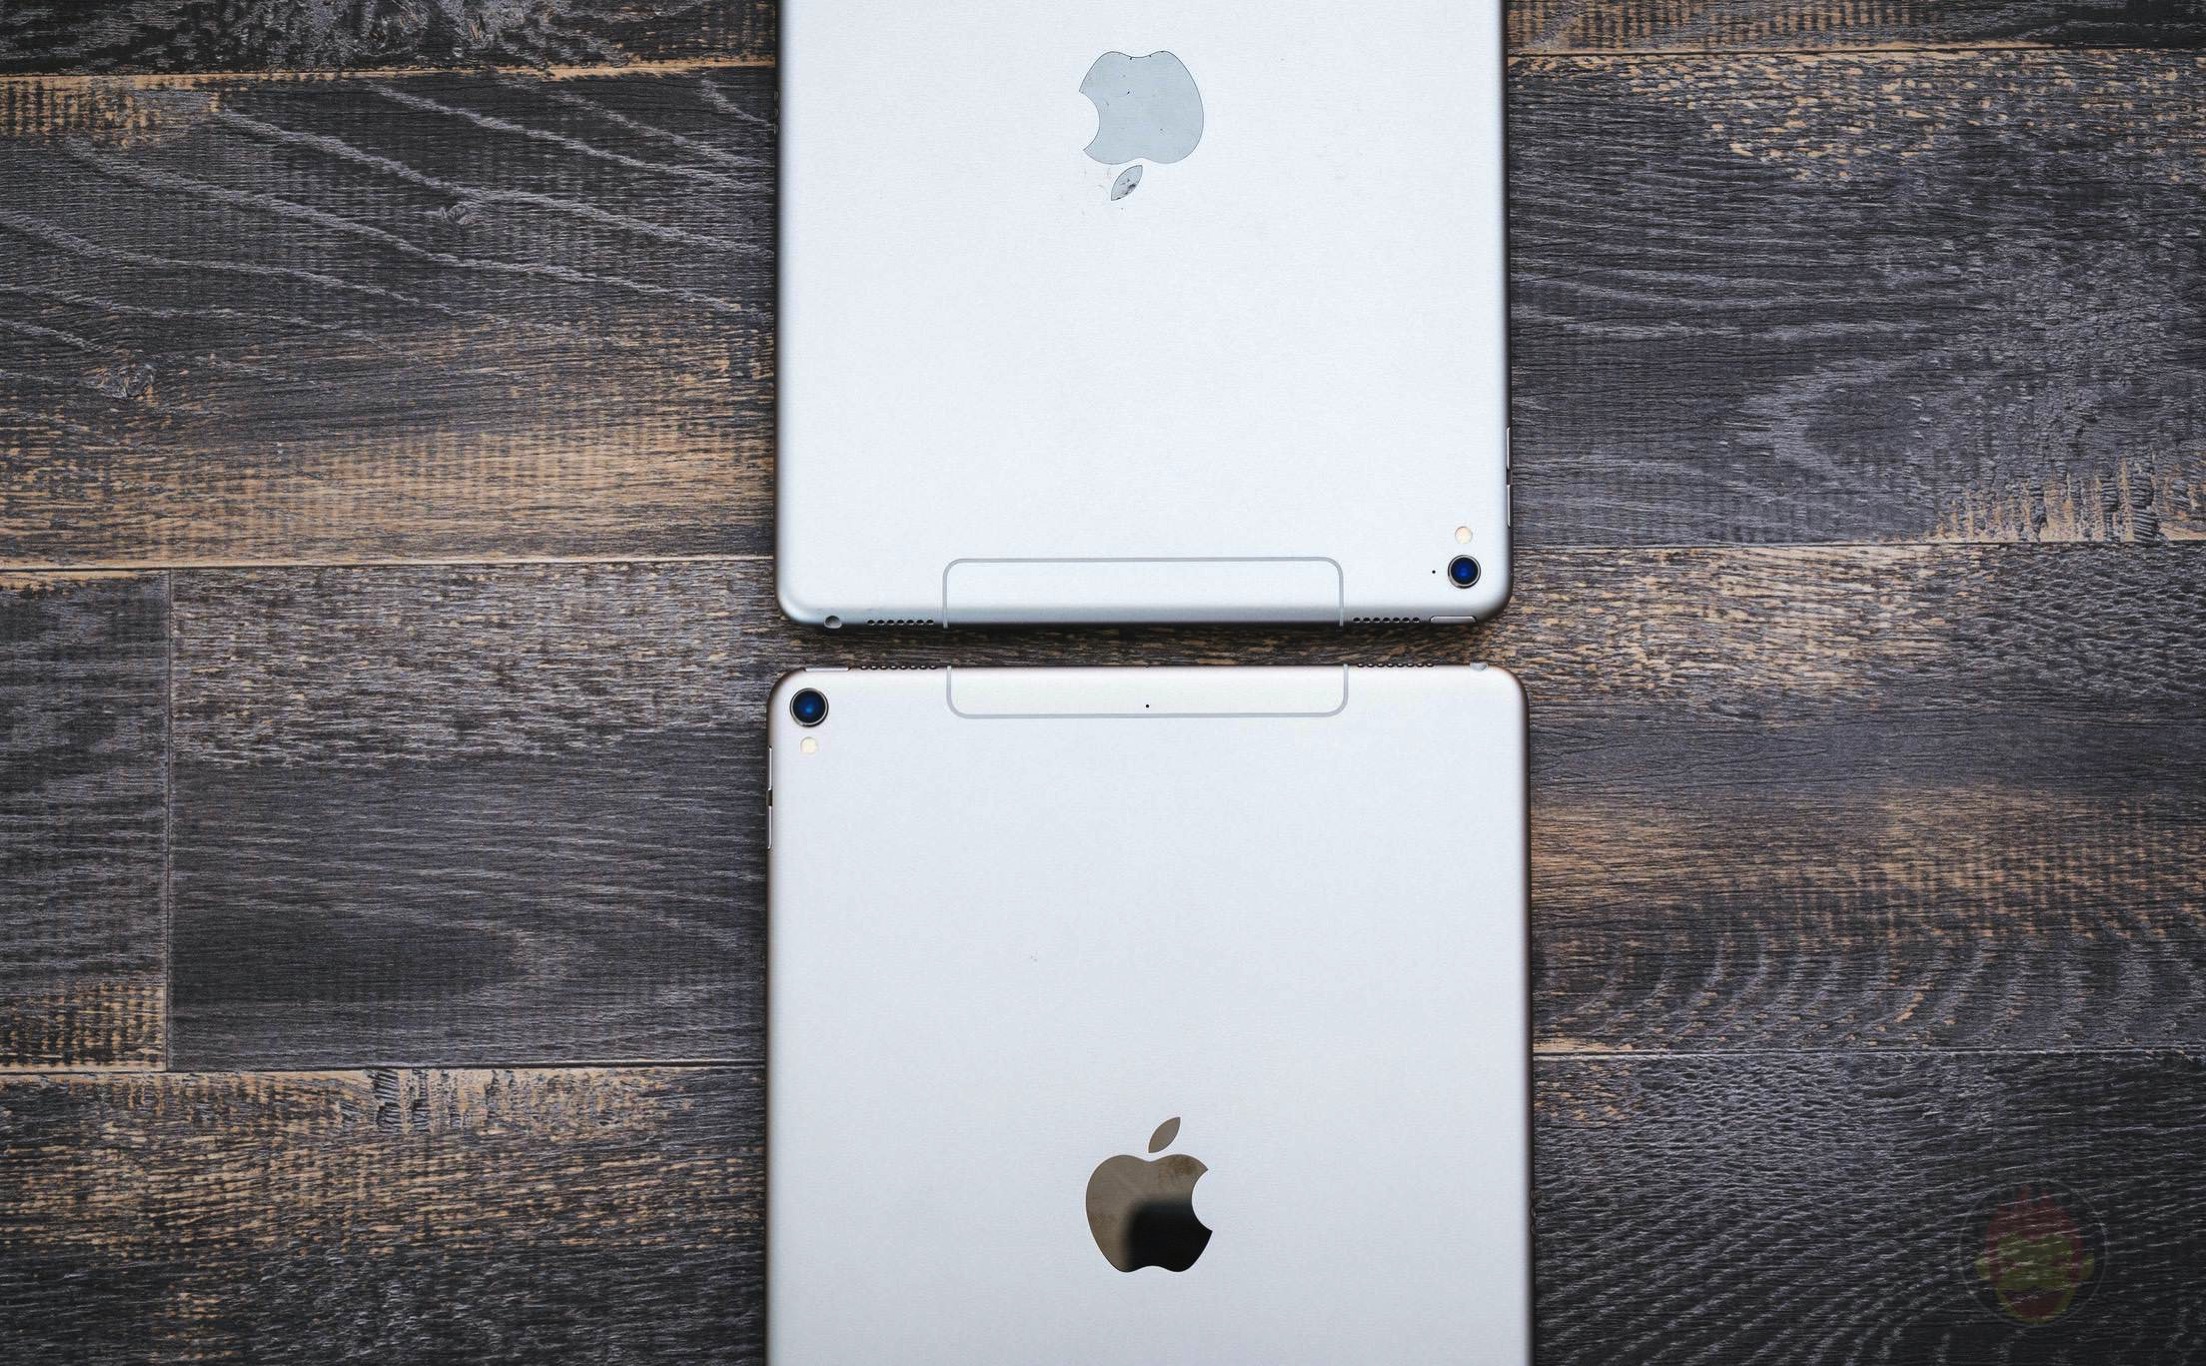 iPad-Pro-10_5inch-Review-13.jpg